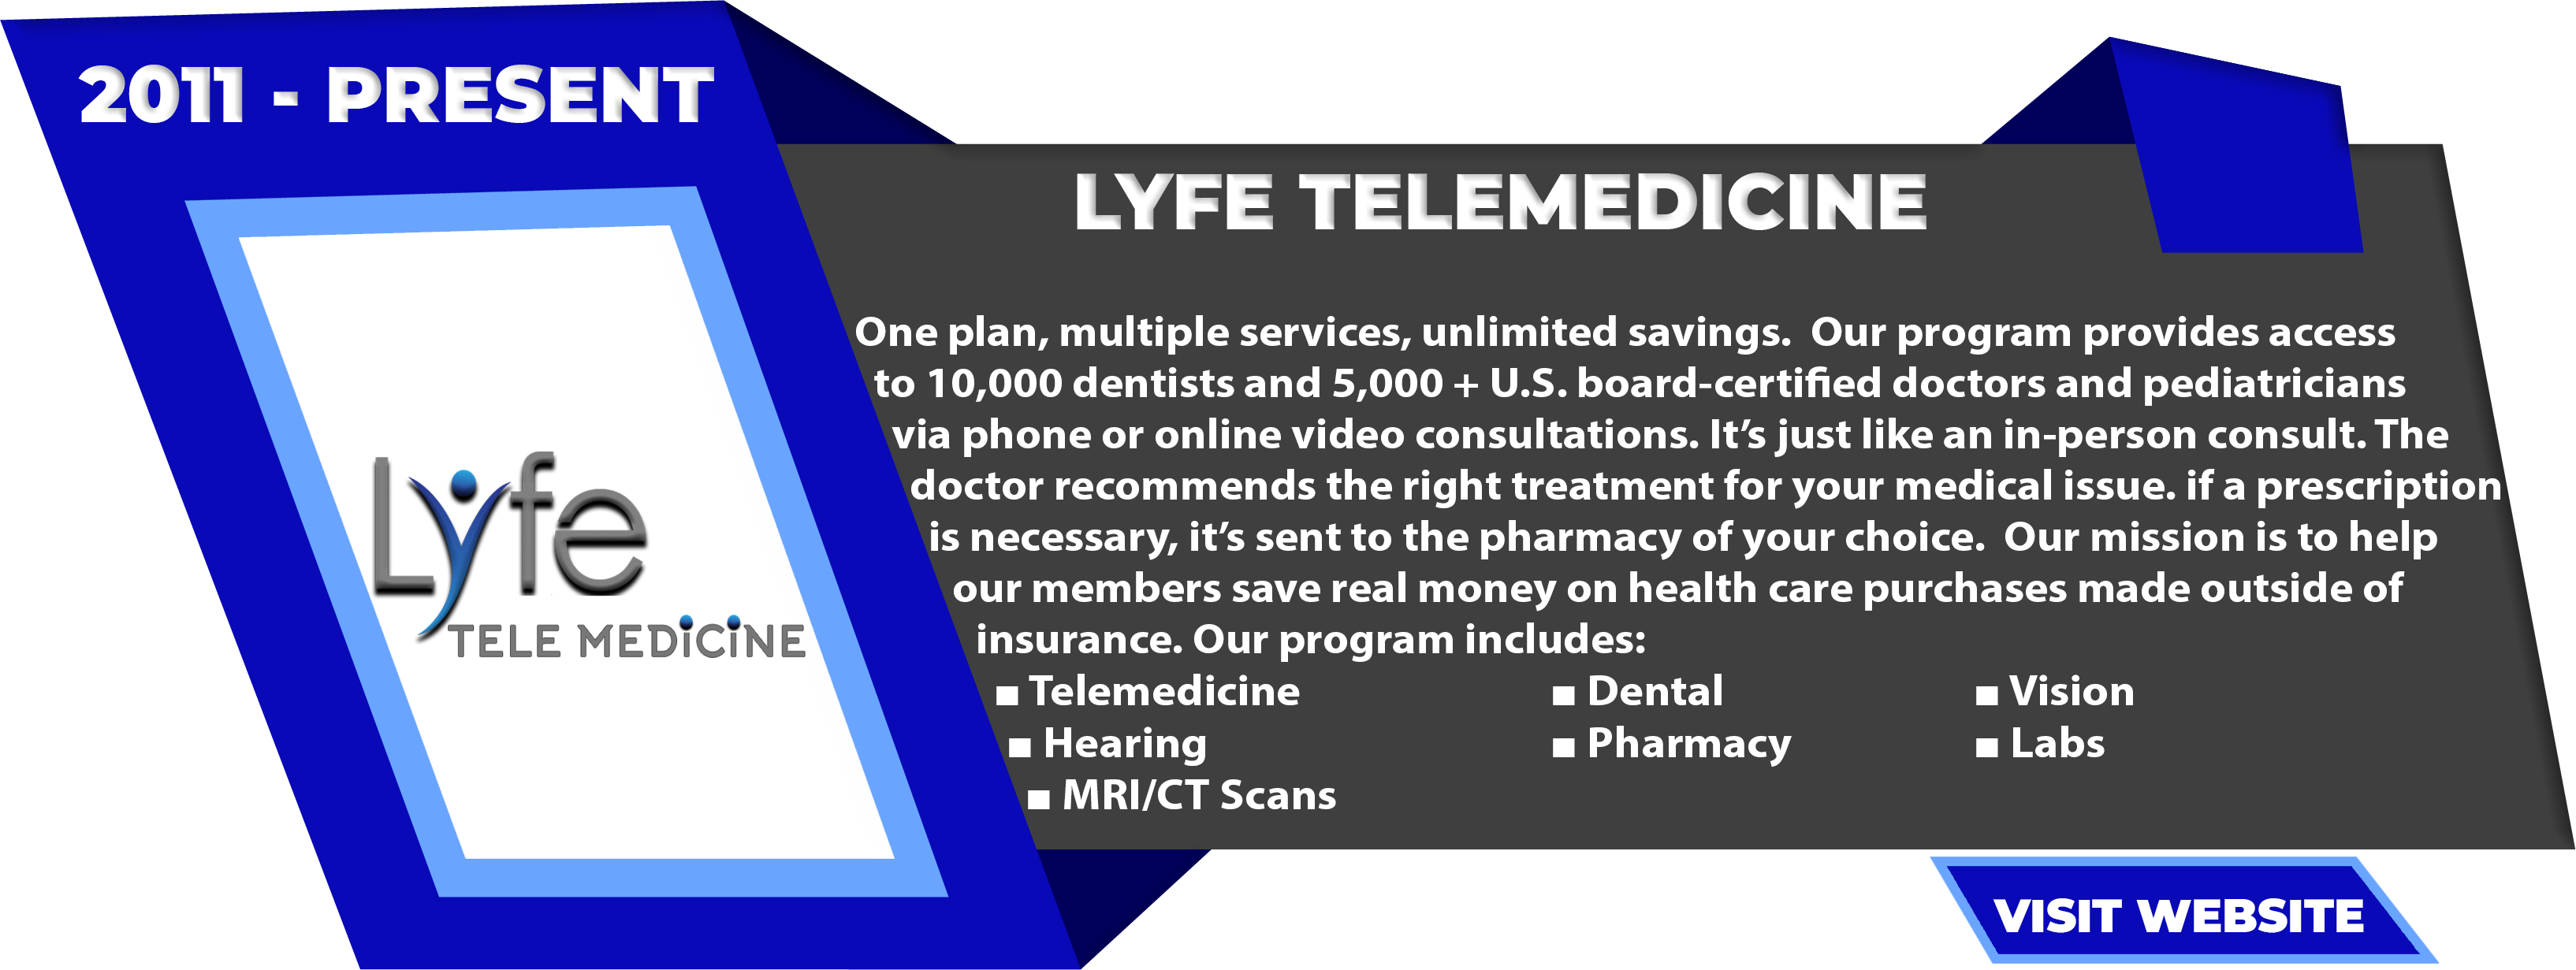 Lyfe Telemedicine 2011 -Present